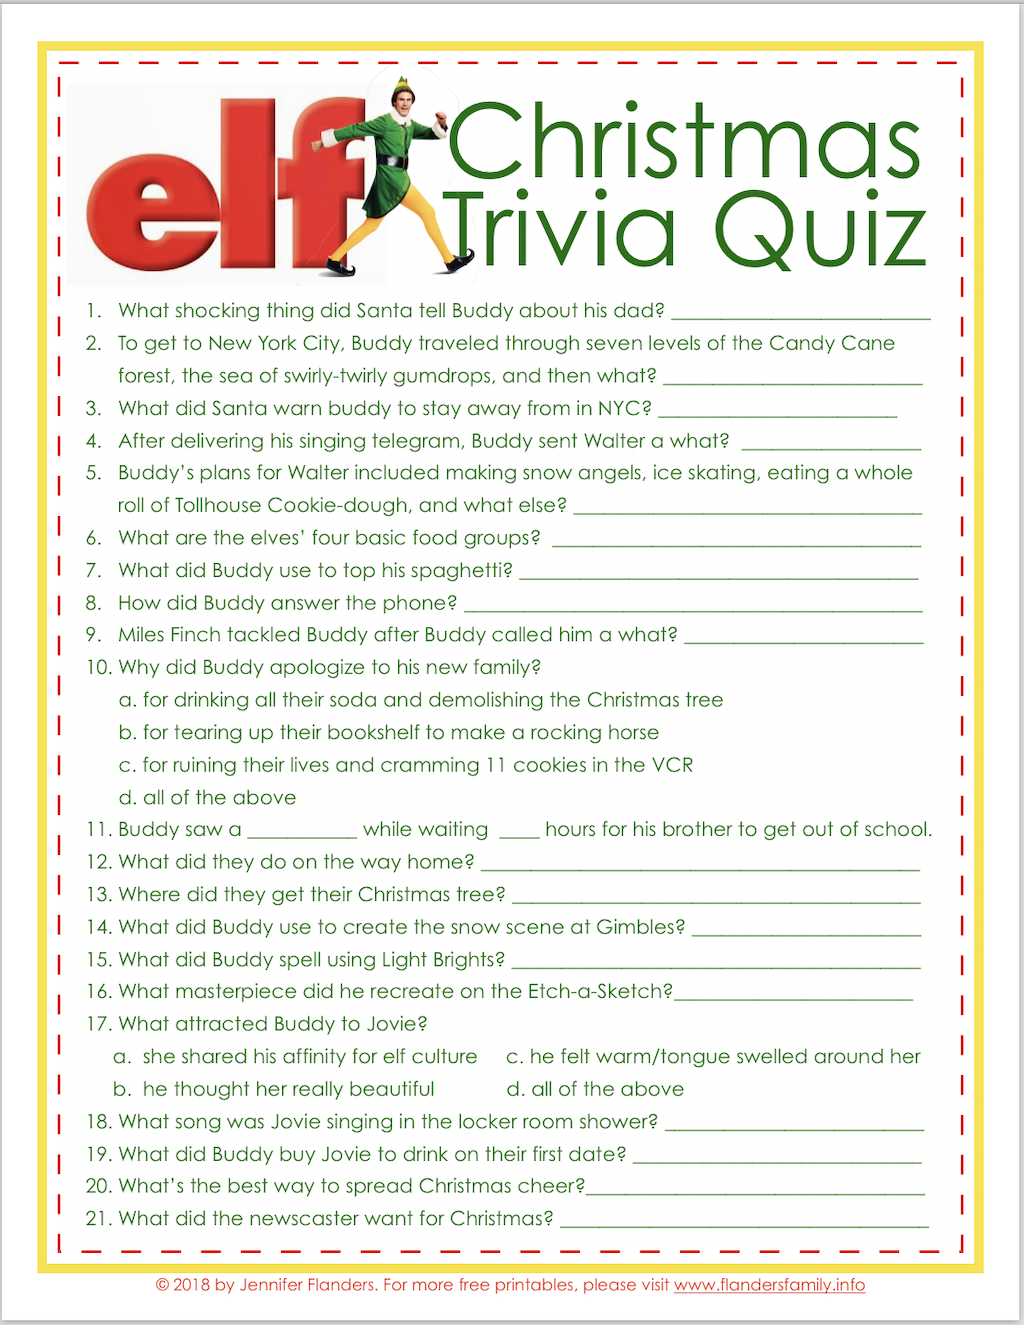 Elf Trivia Christmas Quiz (Free Printable) - Flanders Family